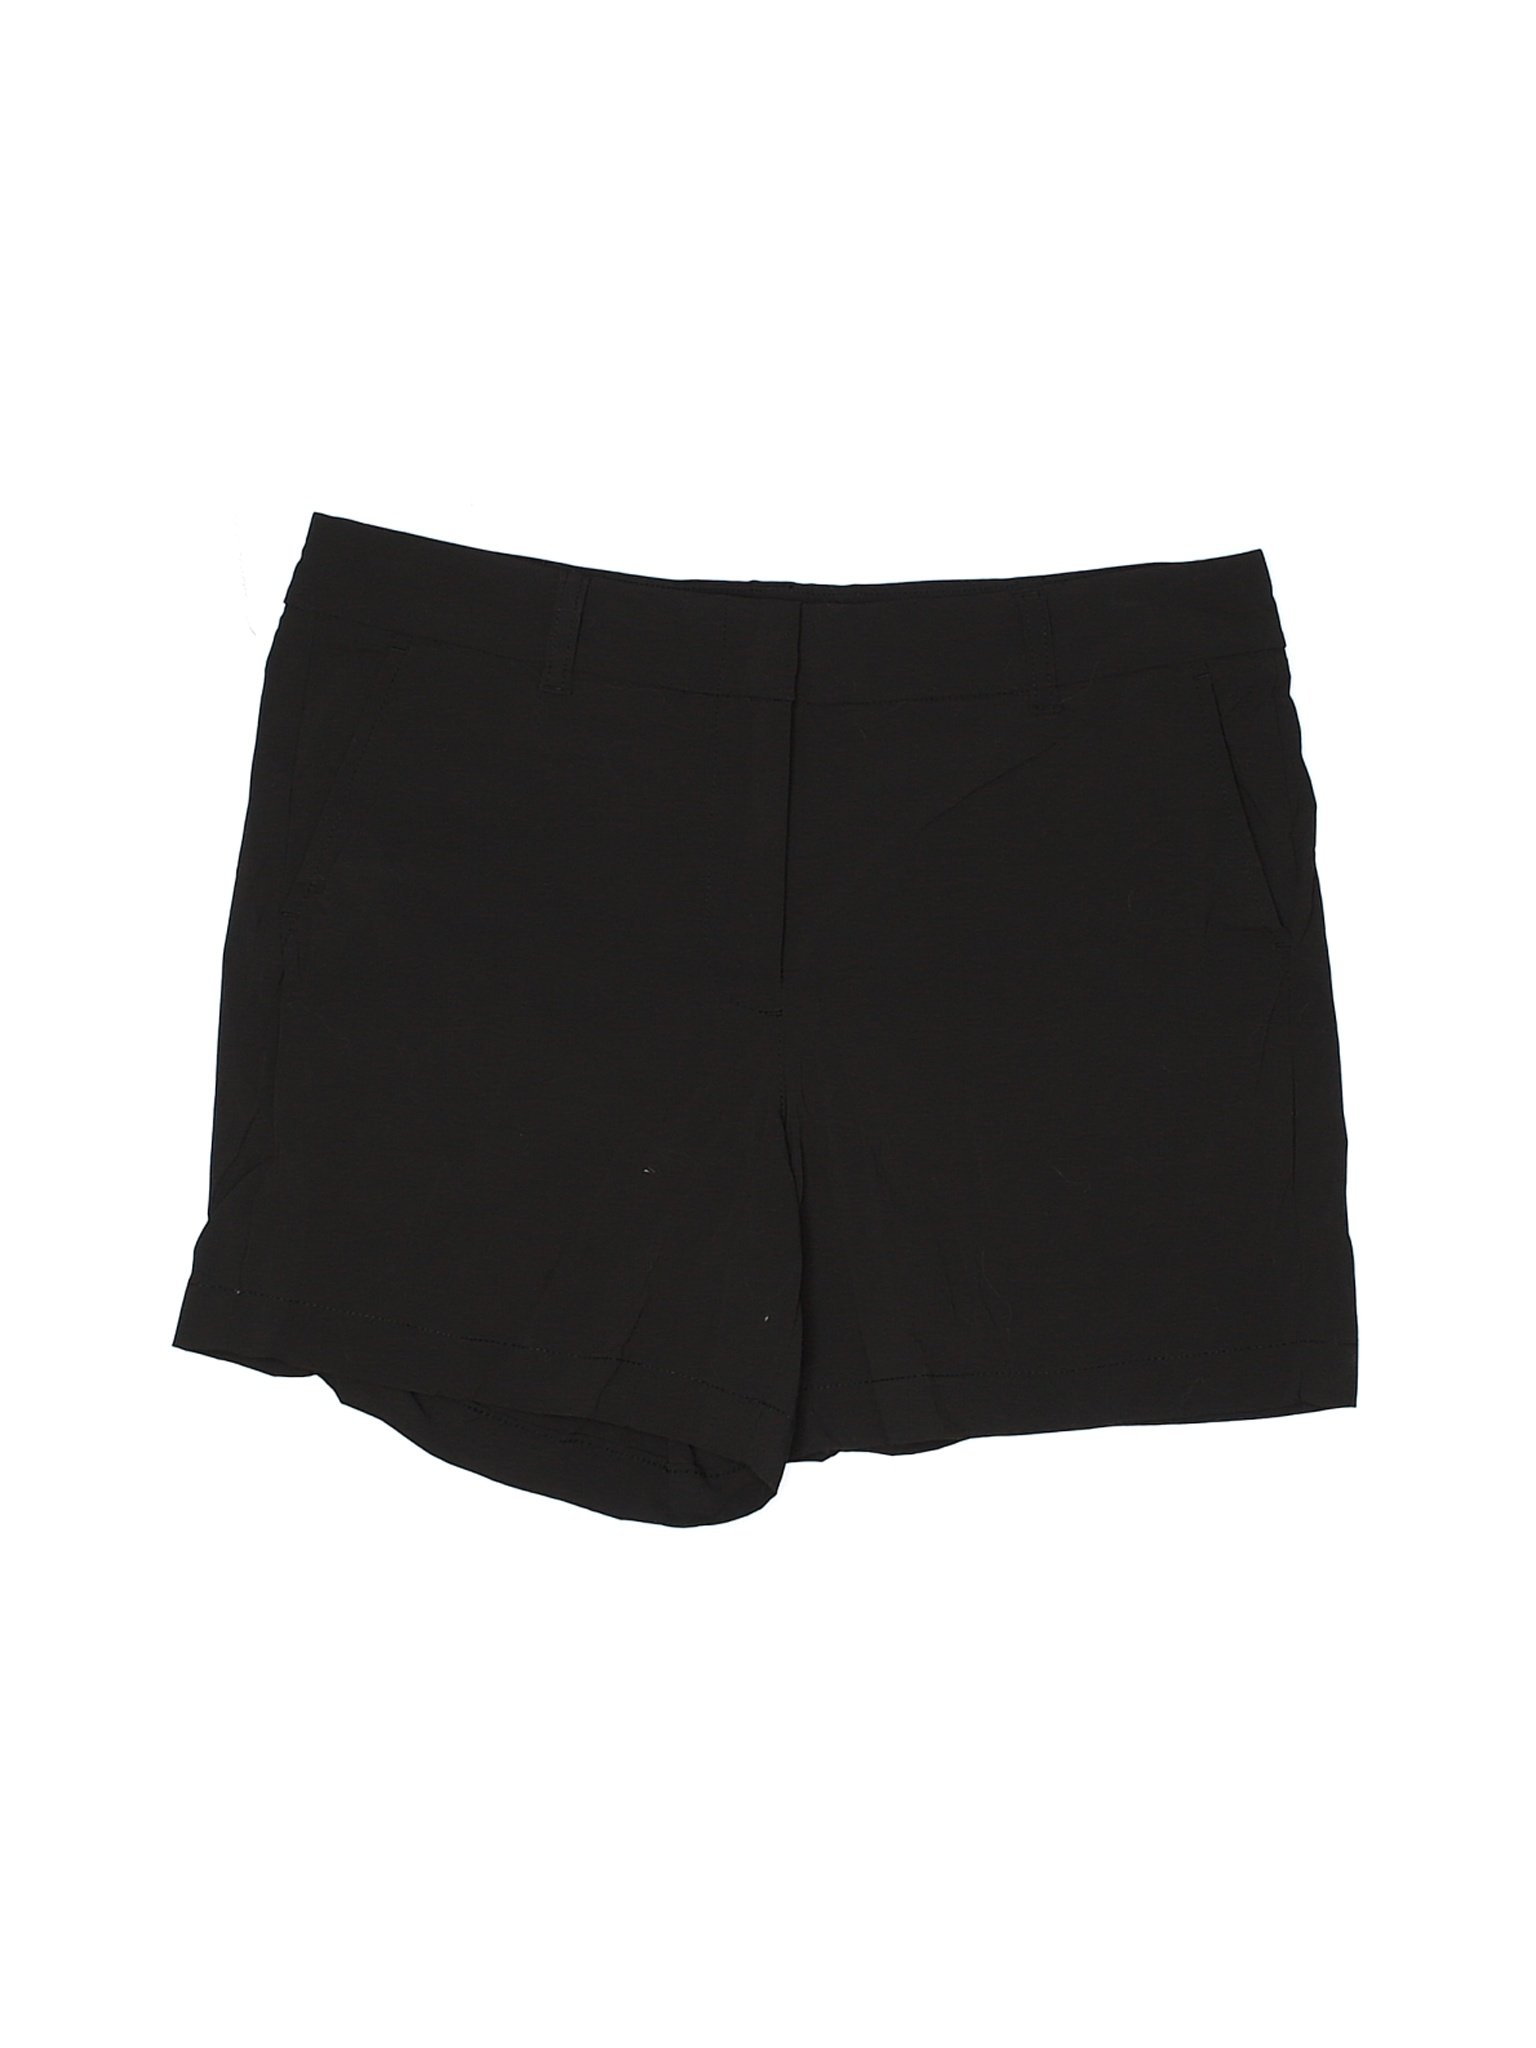 J.Crew Women Black Khaki Shorts 10 | eBay